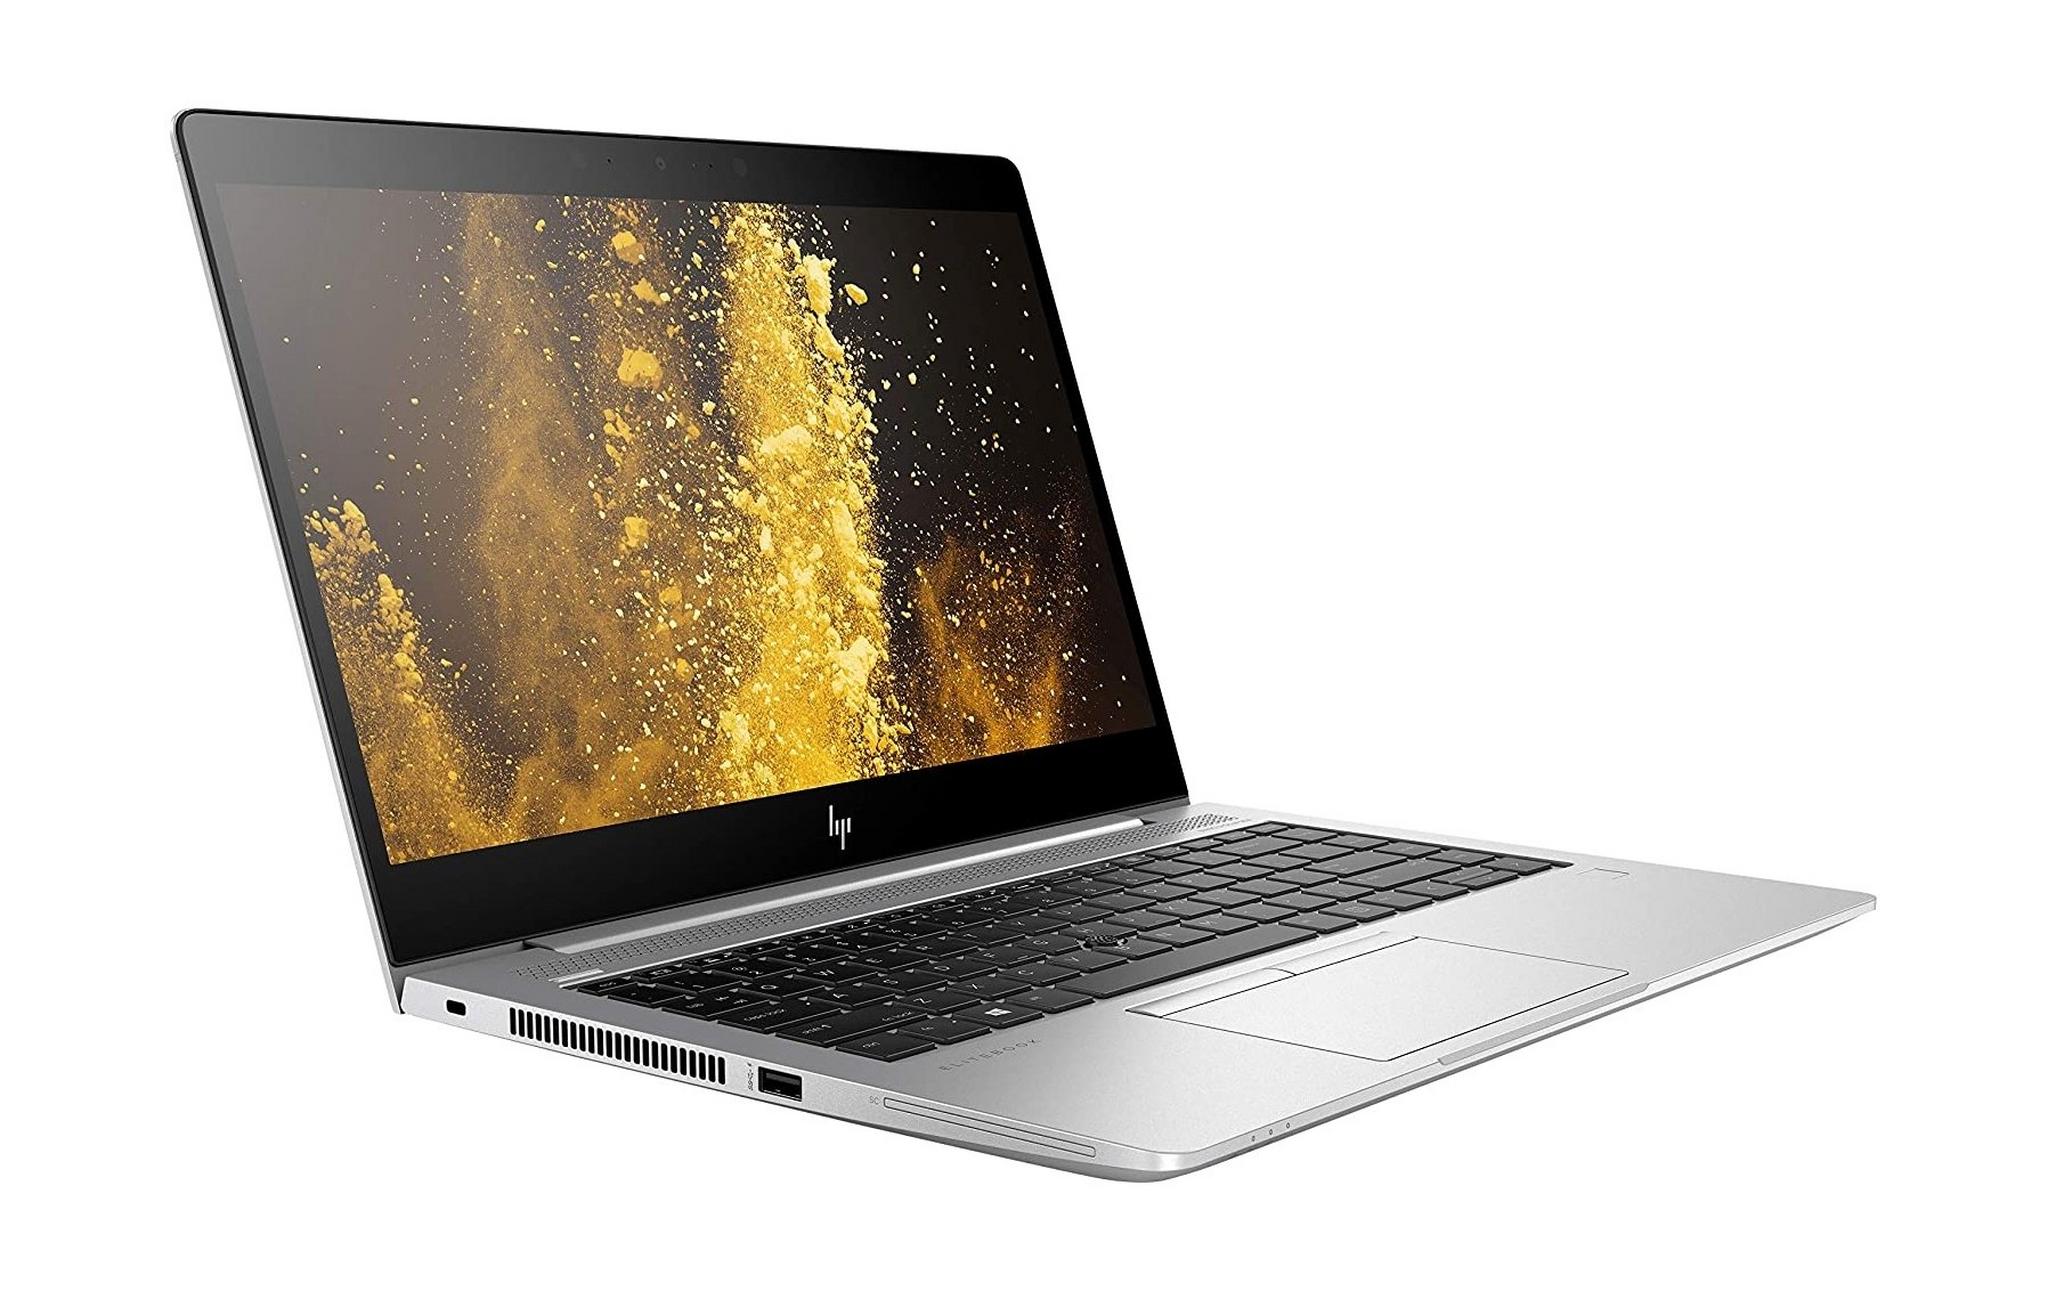 HP EliteBook 840 Core i7 8GB RAM 512GB SSD 14" SMB Laptop (8MJ72EA#ABV) - Silver